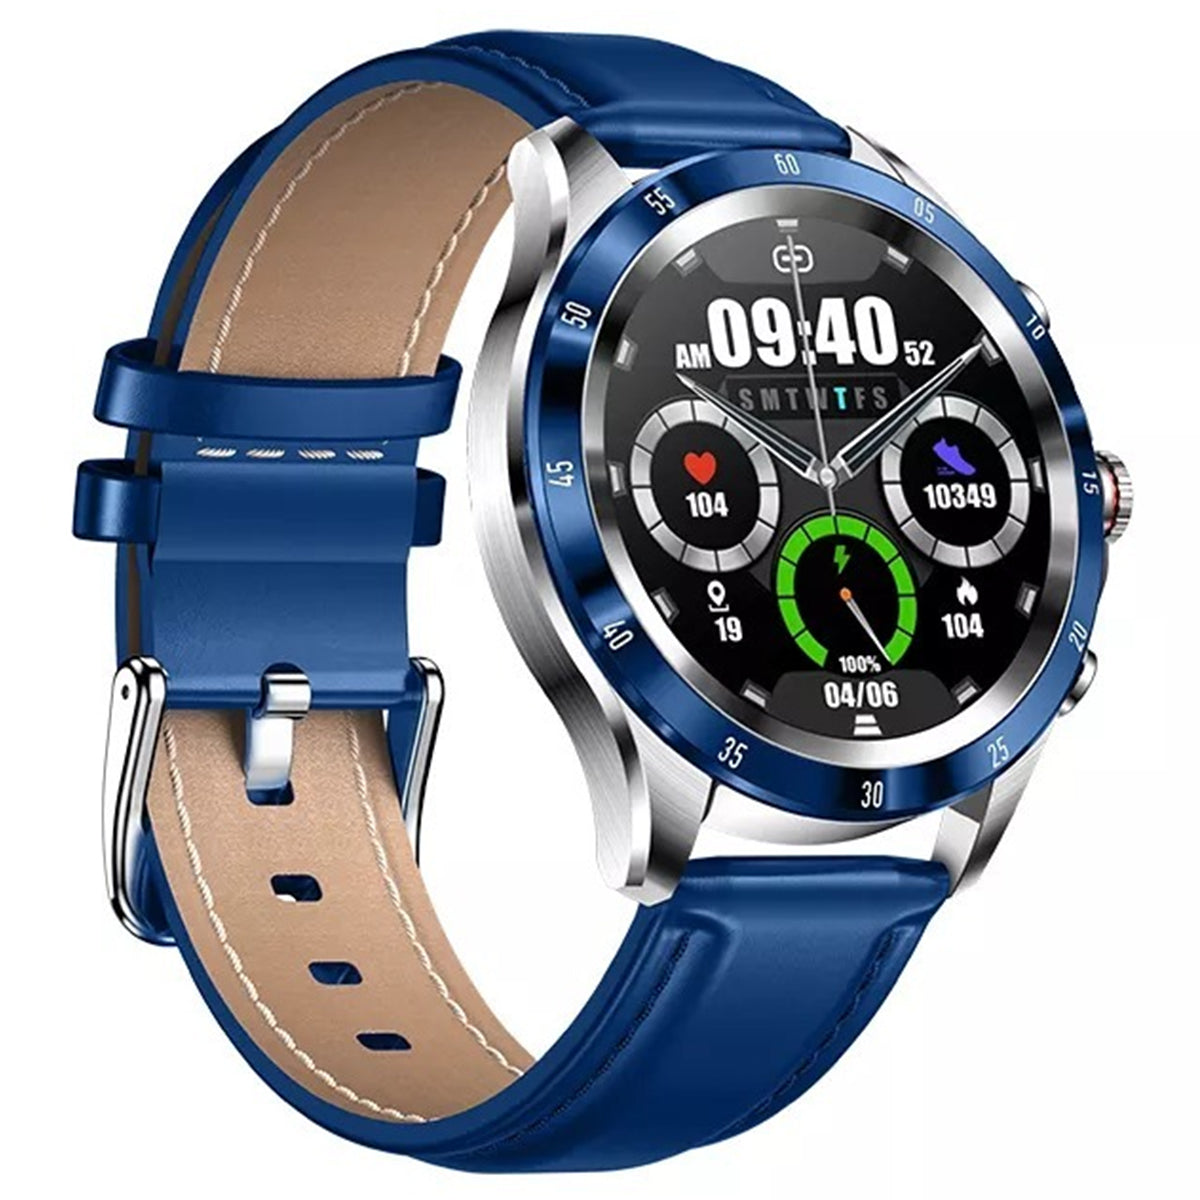 Smartwatch Reloj Inteligente Fralugio Qm022 De Lujo Full Hd